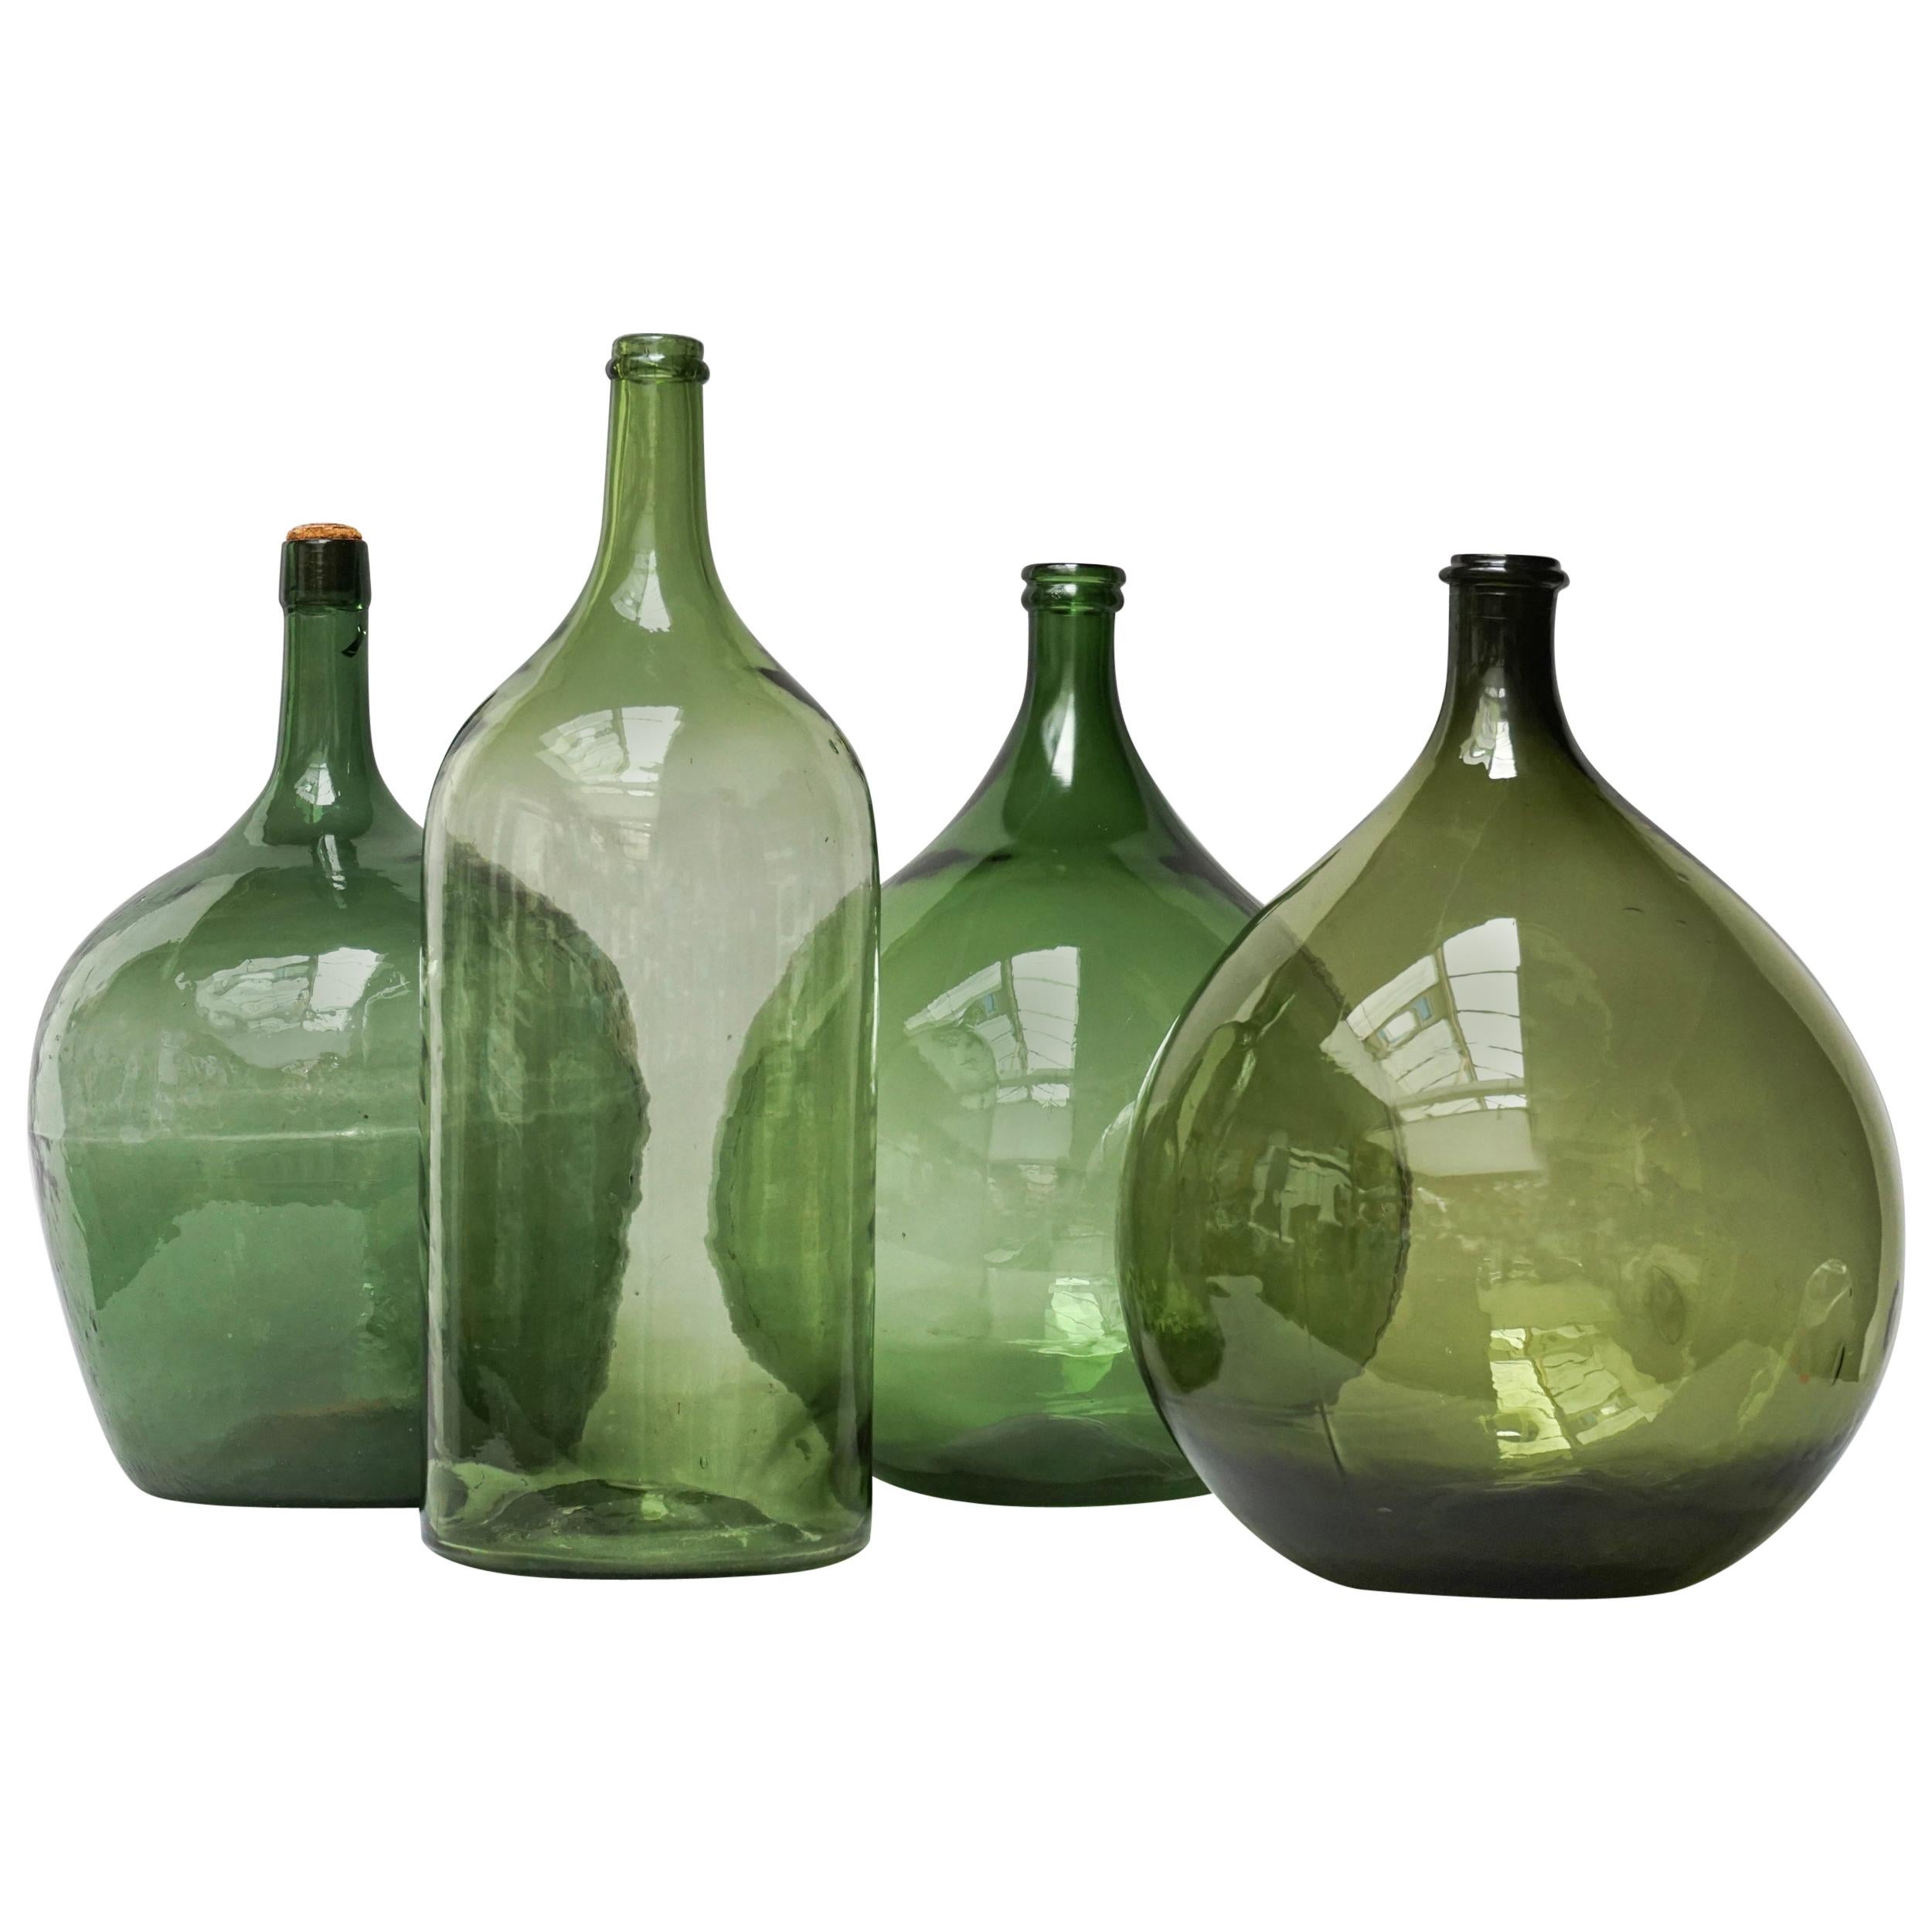 Set of Four Vintage Green Glass Bottles Demijohns, Lady Jeanne or Carboys